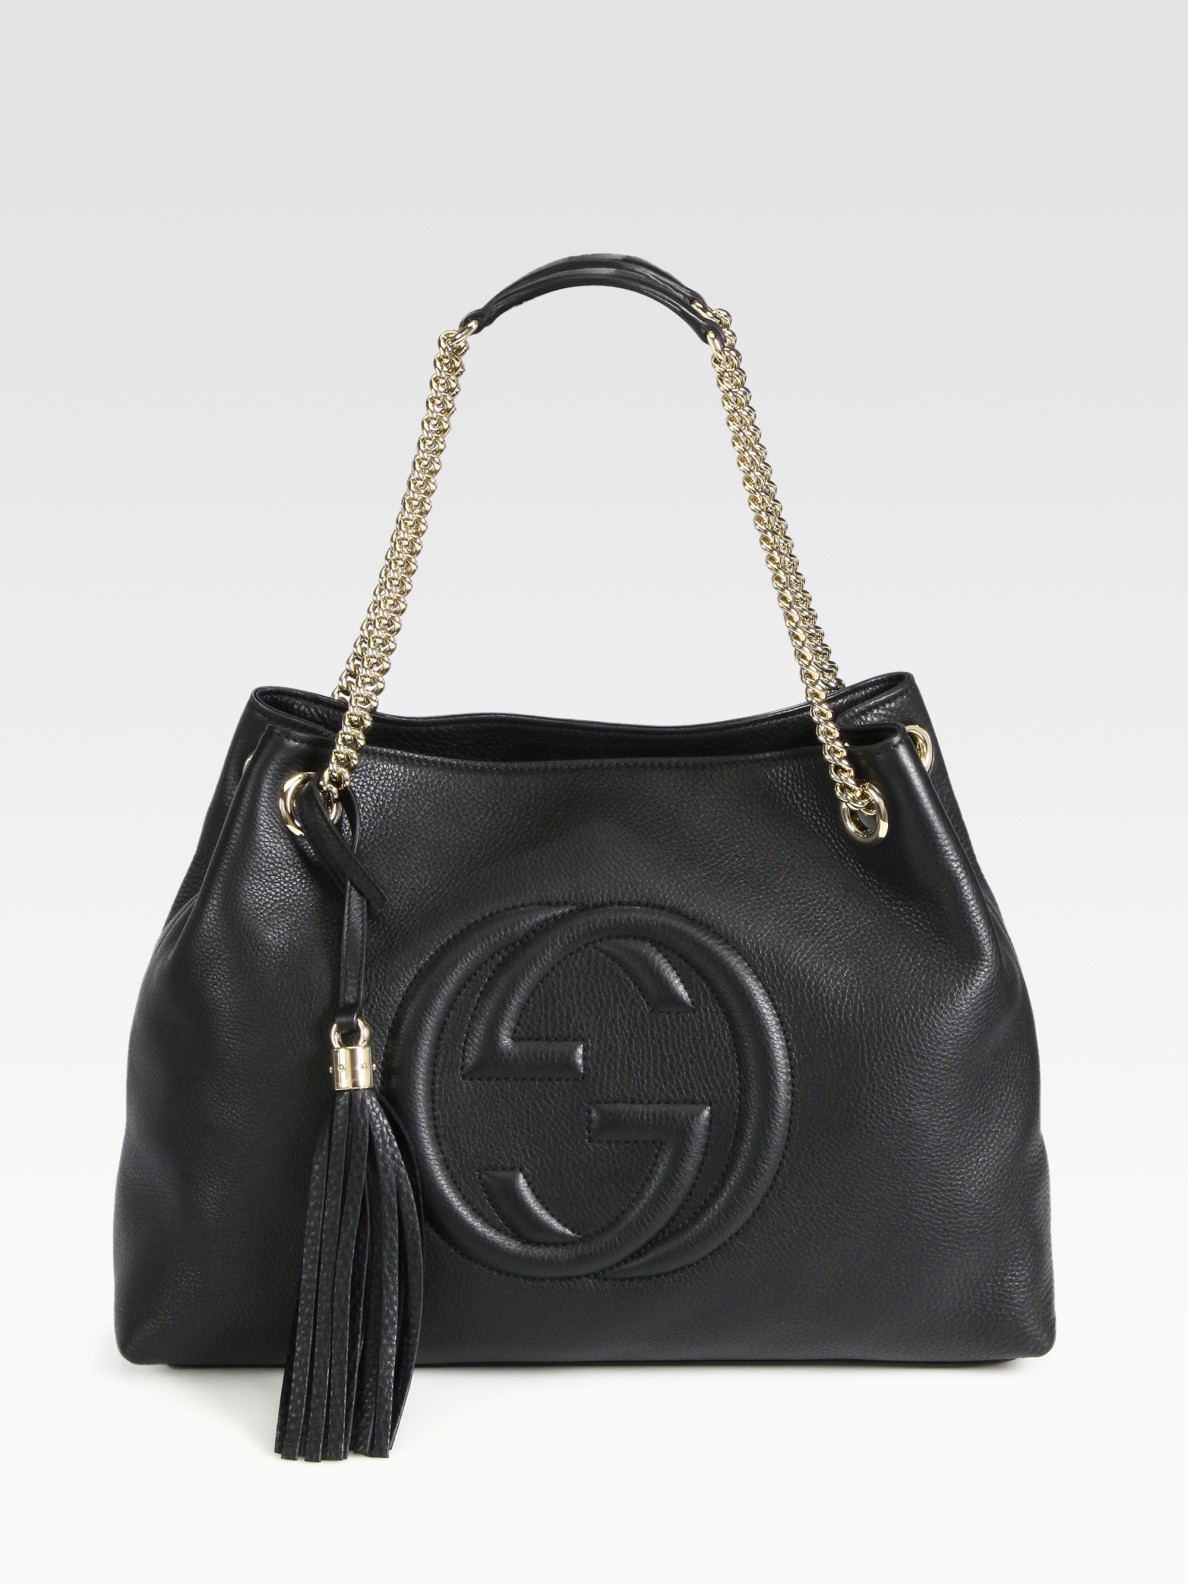 Lyst - Gucci Soho Medium Leather Shoulder Bag in Black